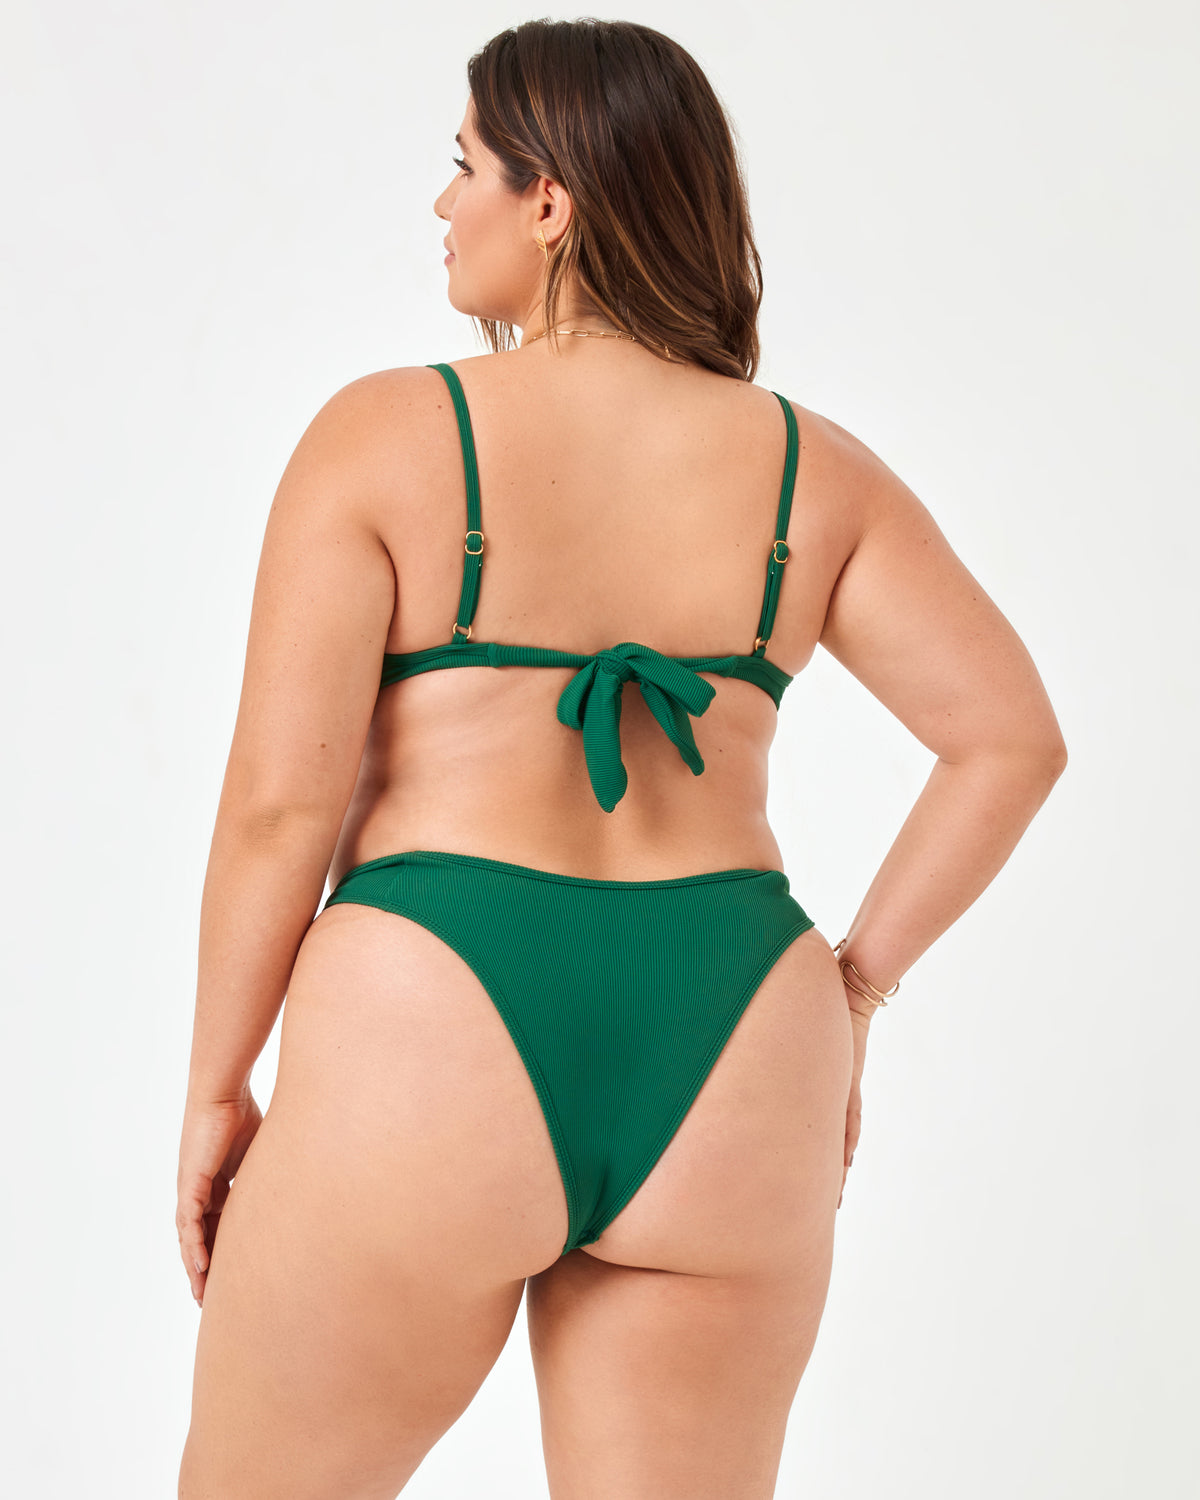 Ribbed Dominic Bikini Bottom - Emerald Ribbed Dominic Bikini Bottom - Emerald